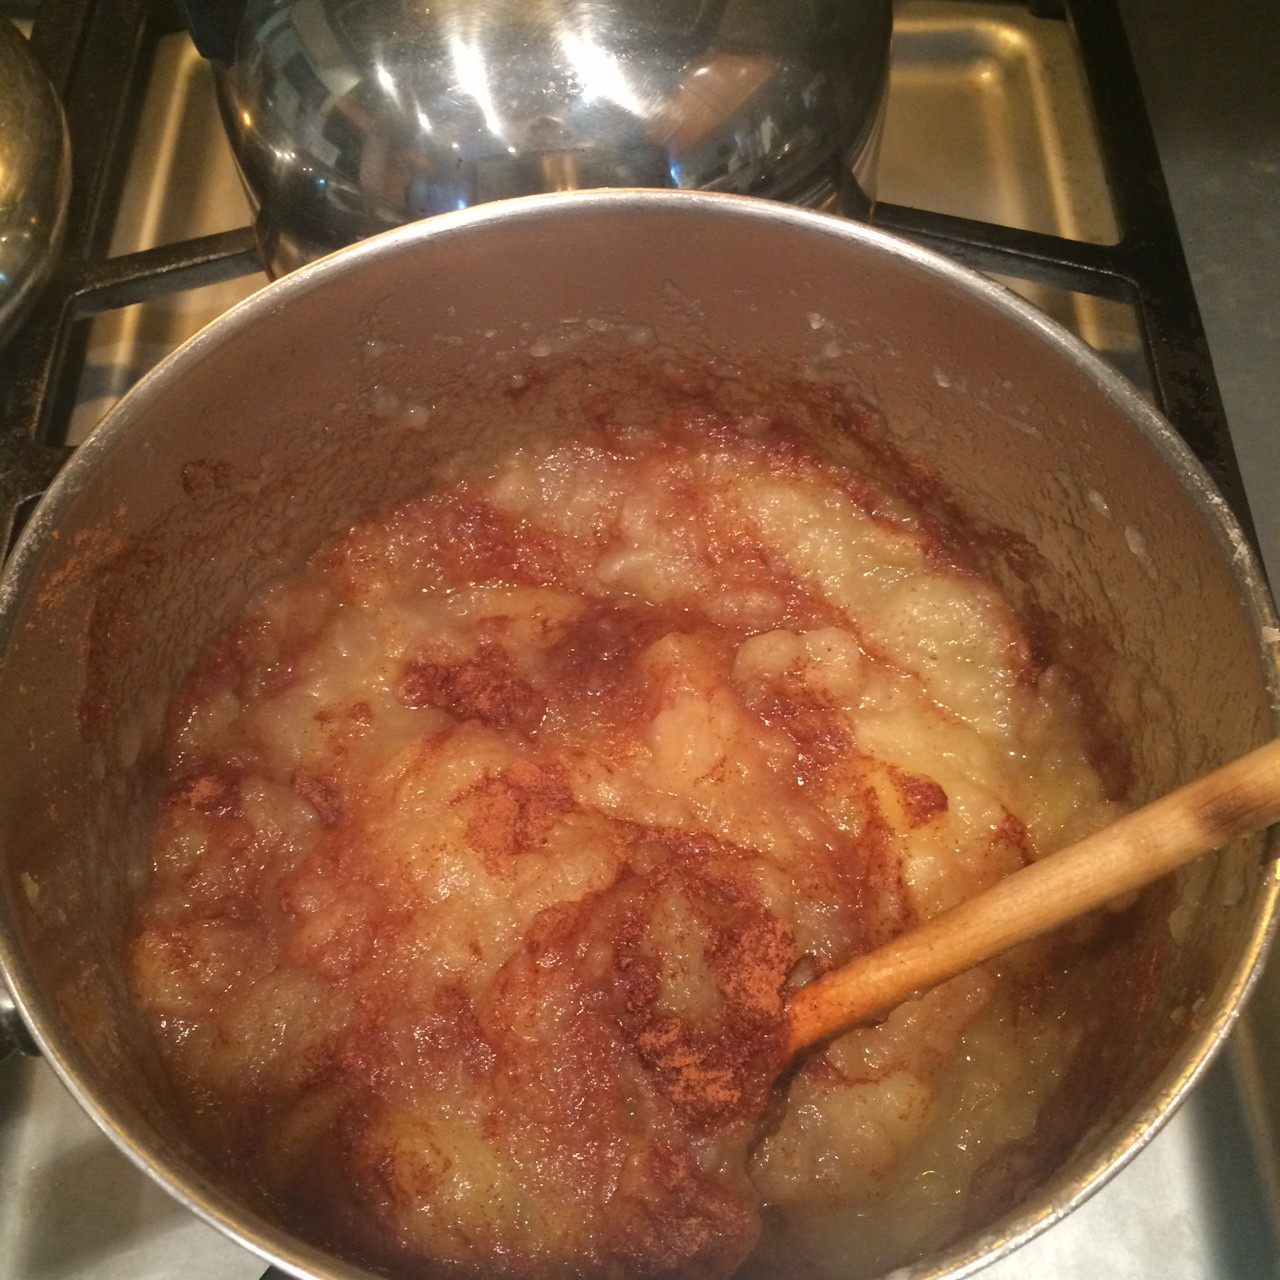 stirring cinnamon in to applesauce